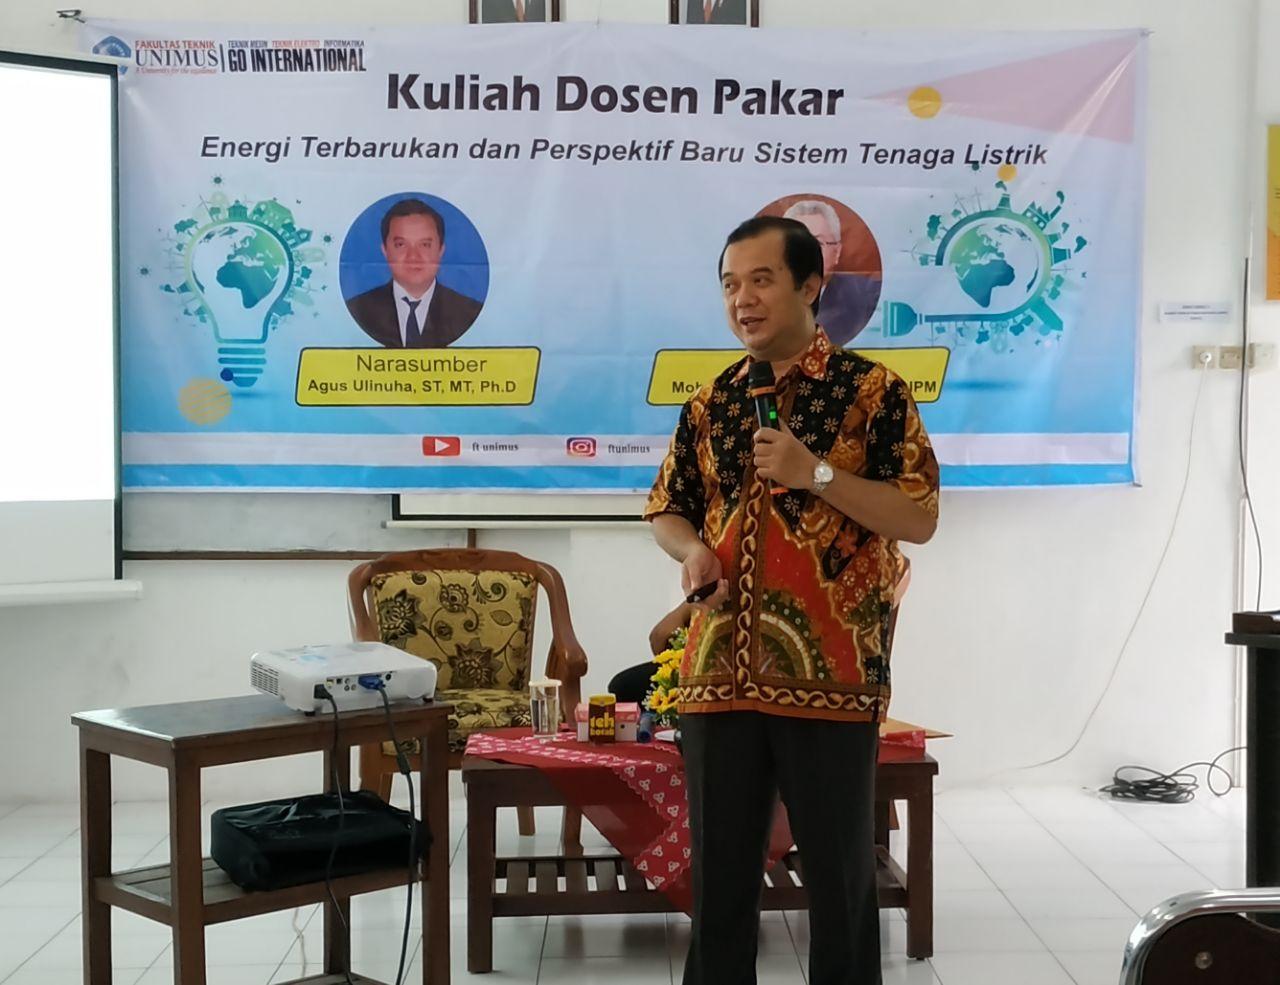 Agus Ulinuha. ST. MT., P.hD., Dosen Teknil Elektro auniversitas Muhammadiyah Surakarta (UMS).